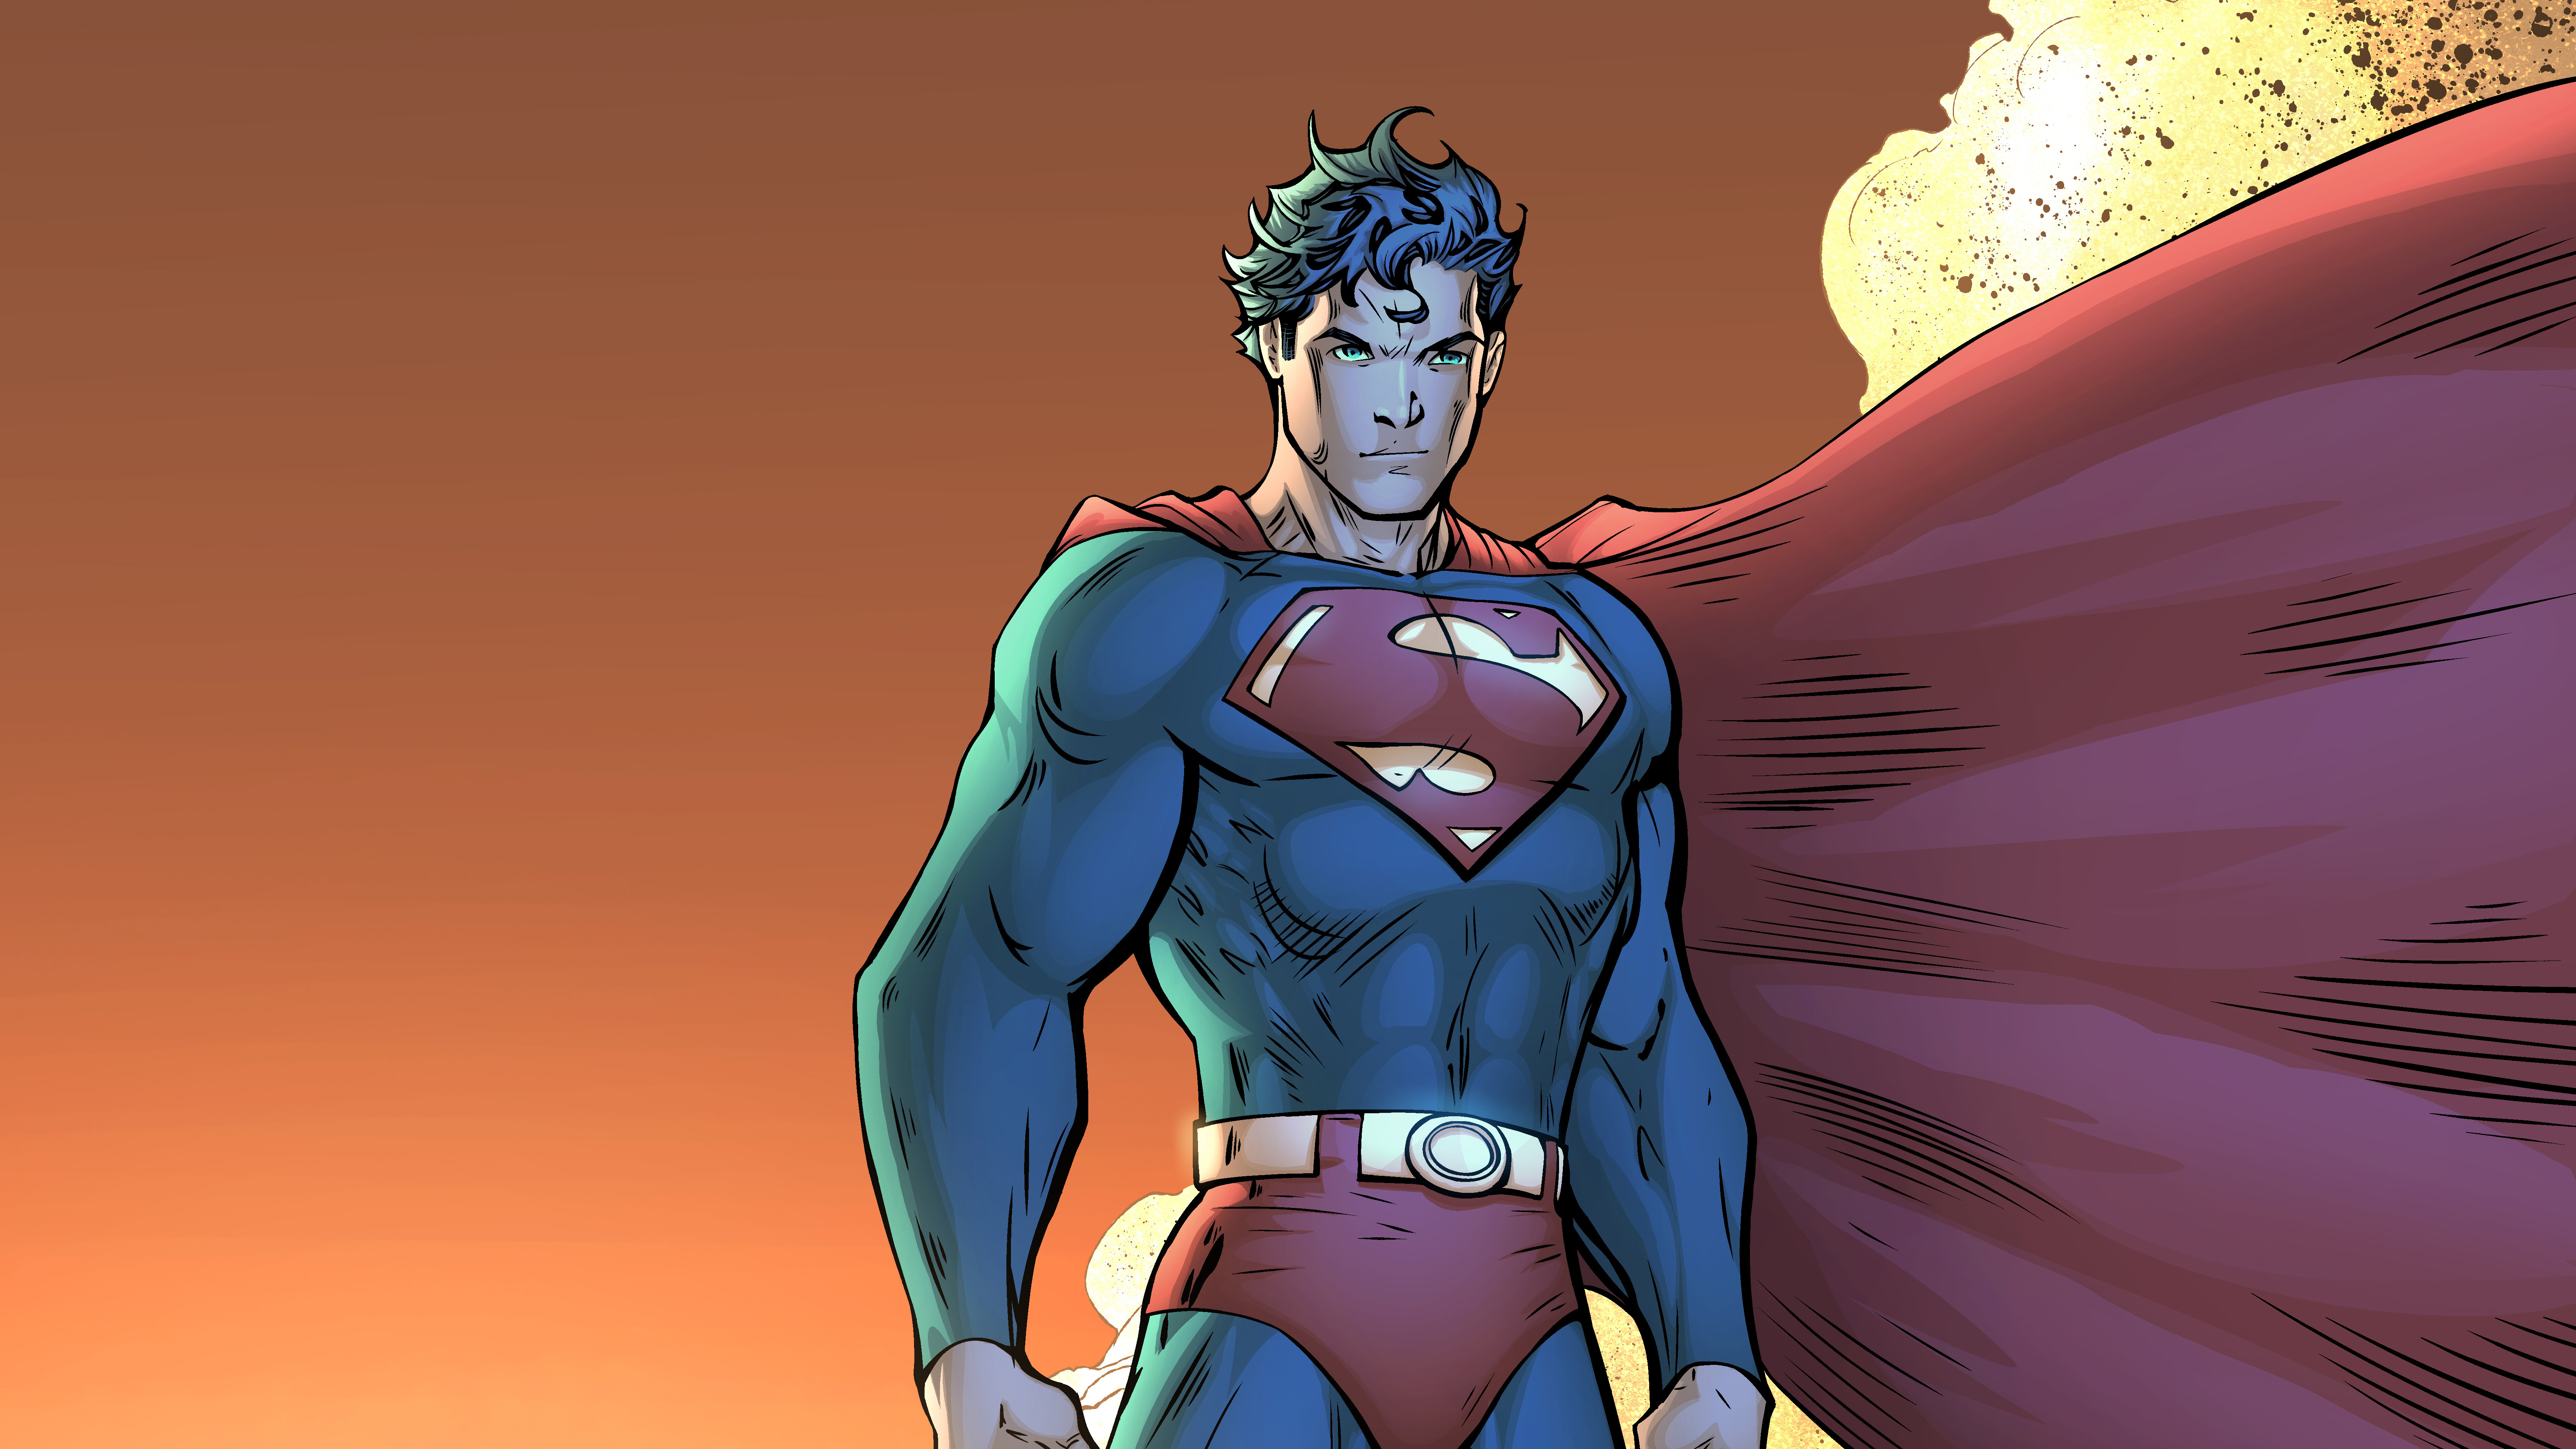 Superman Comic Book Poster 5k, HD Superheroes, 4k Wallpapers, Images